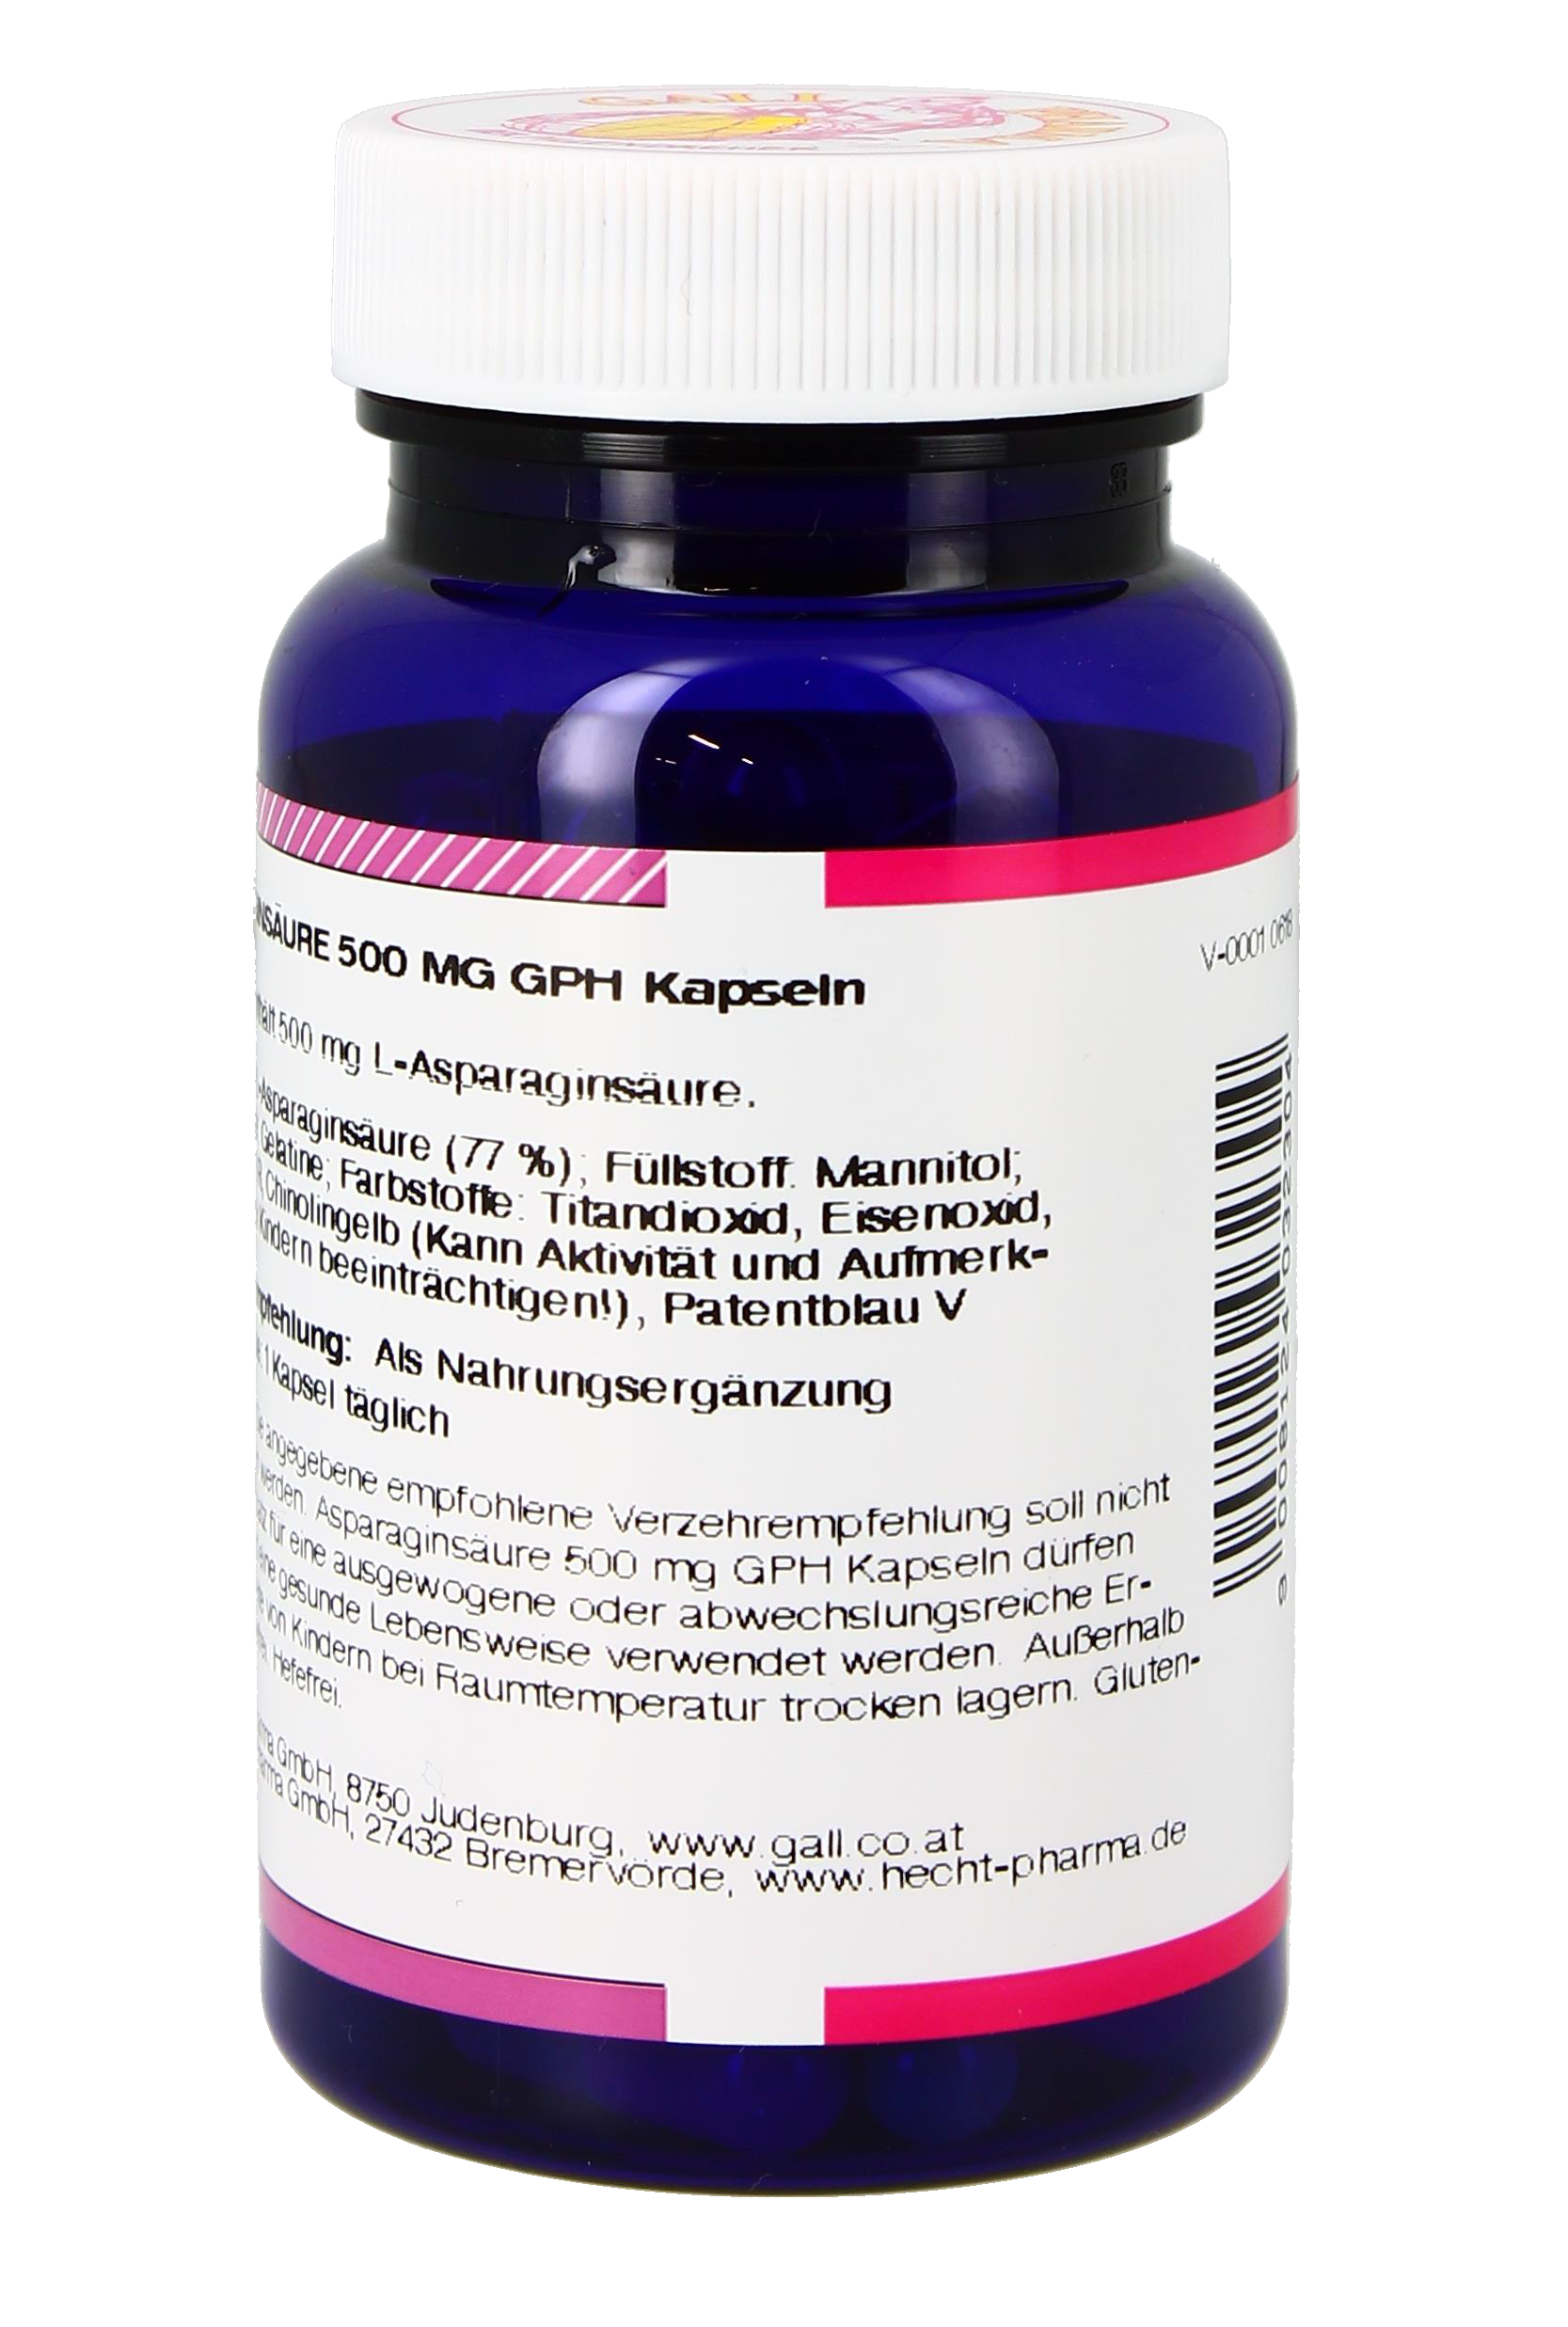 Asparaginsäure 500 mg GPH Kapseln